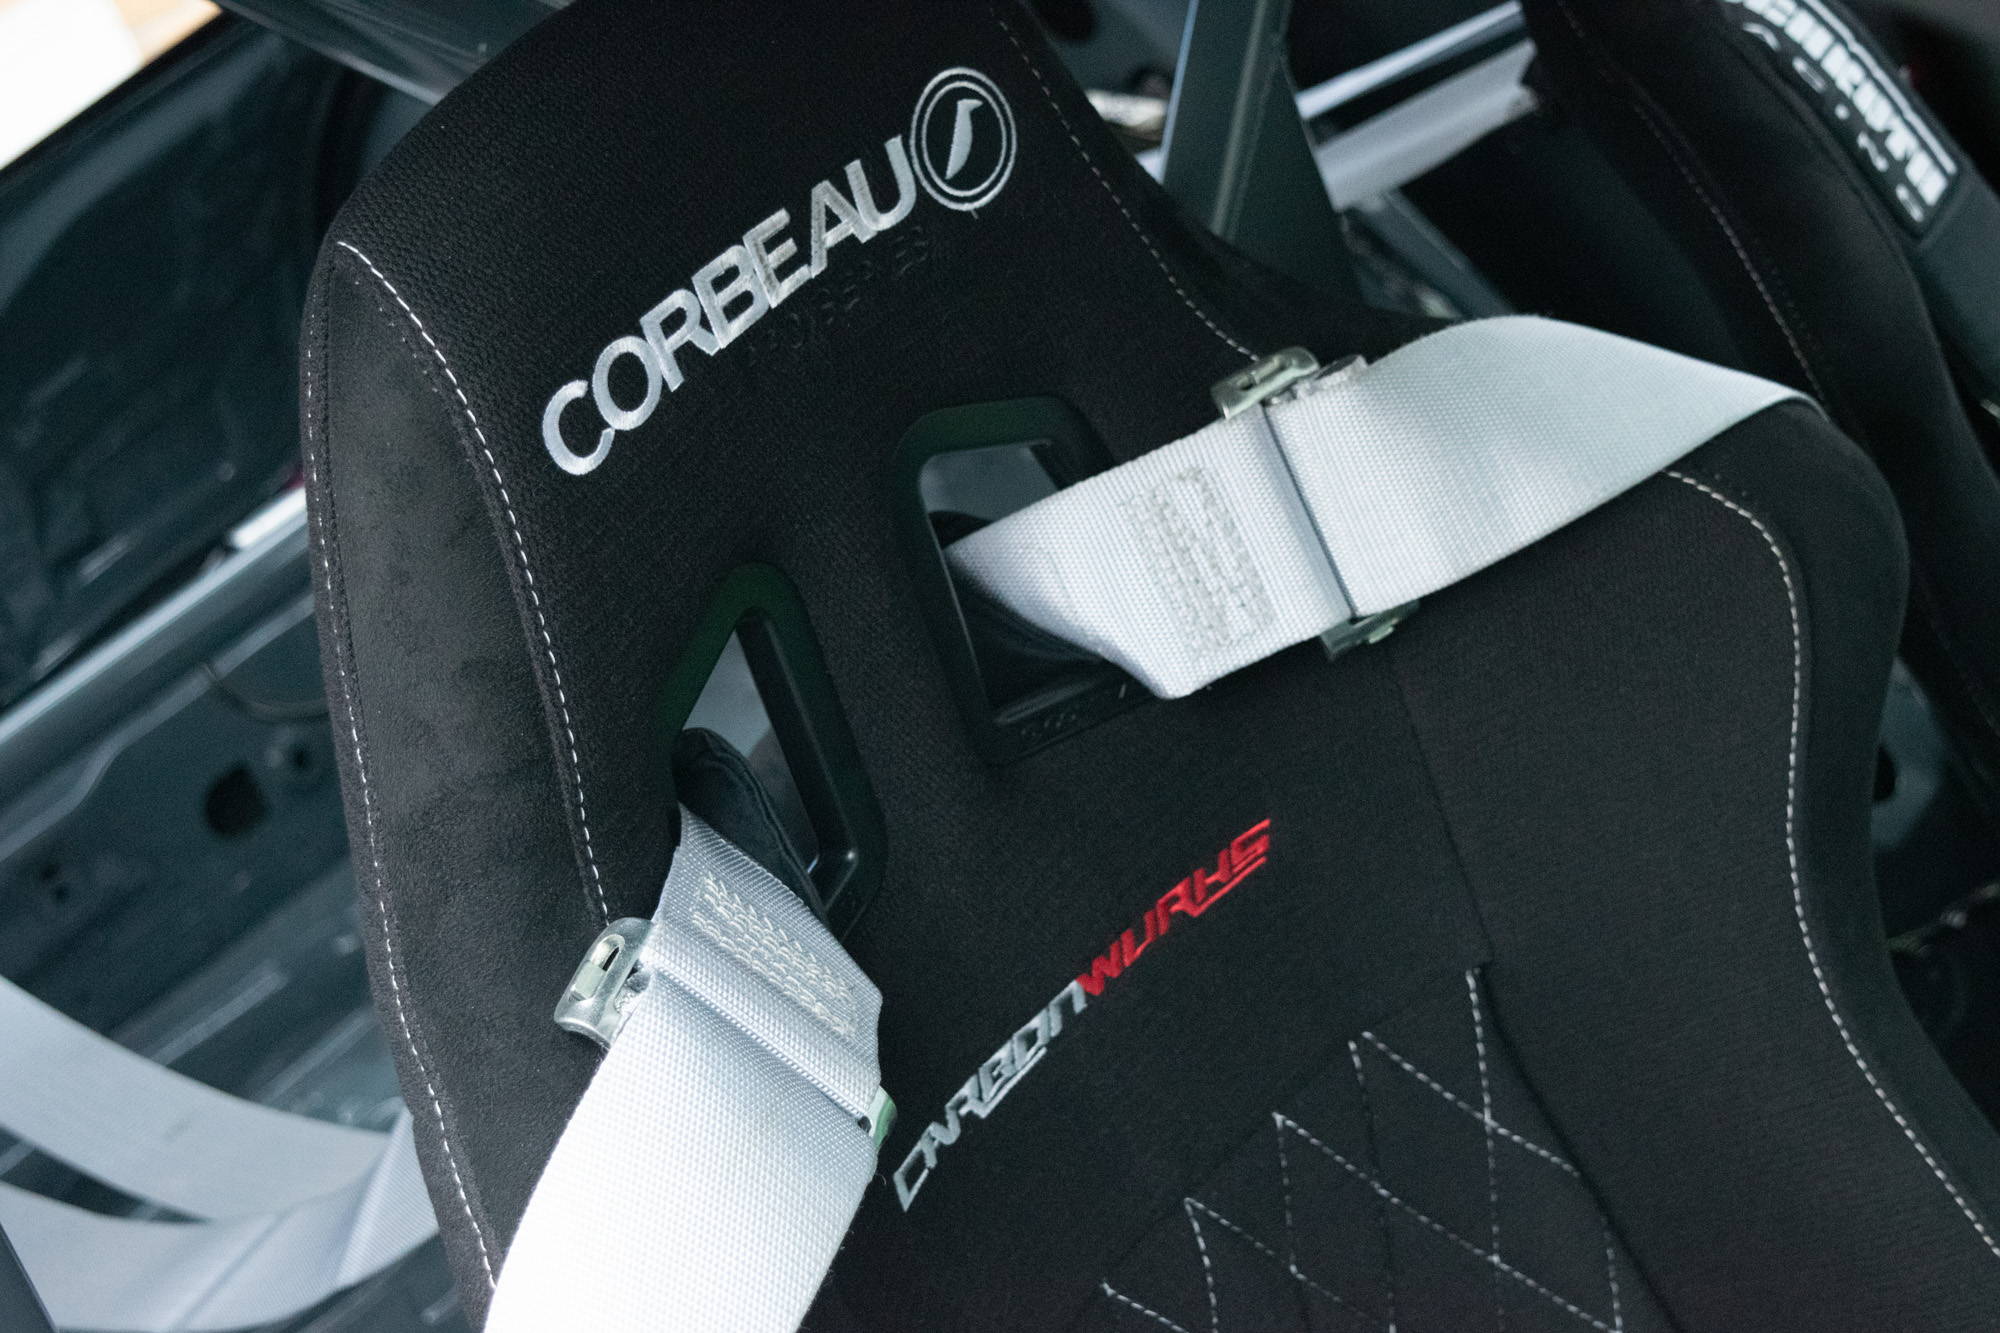 Carbonwurks Track Car Build - Corbeau Seats